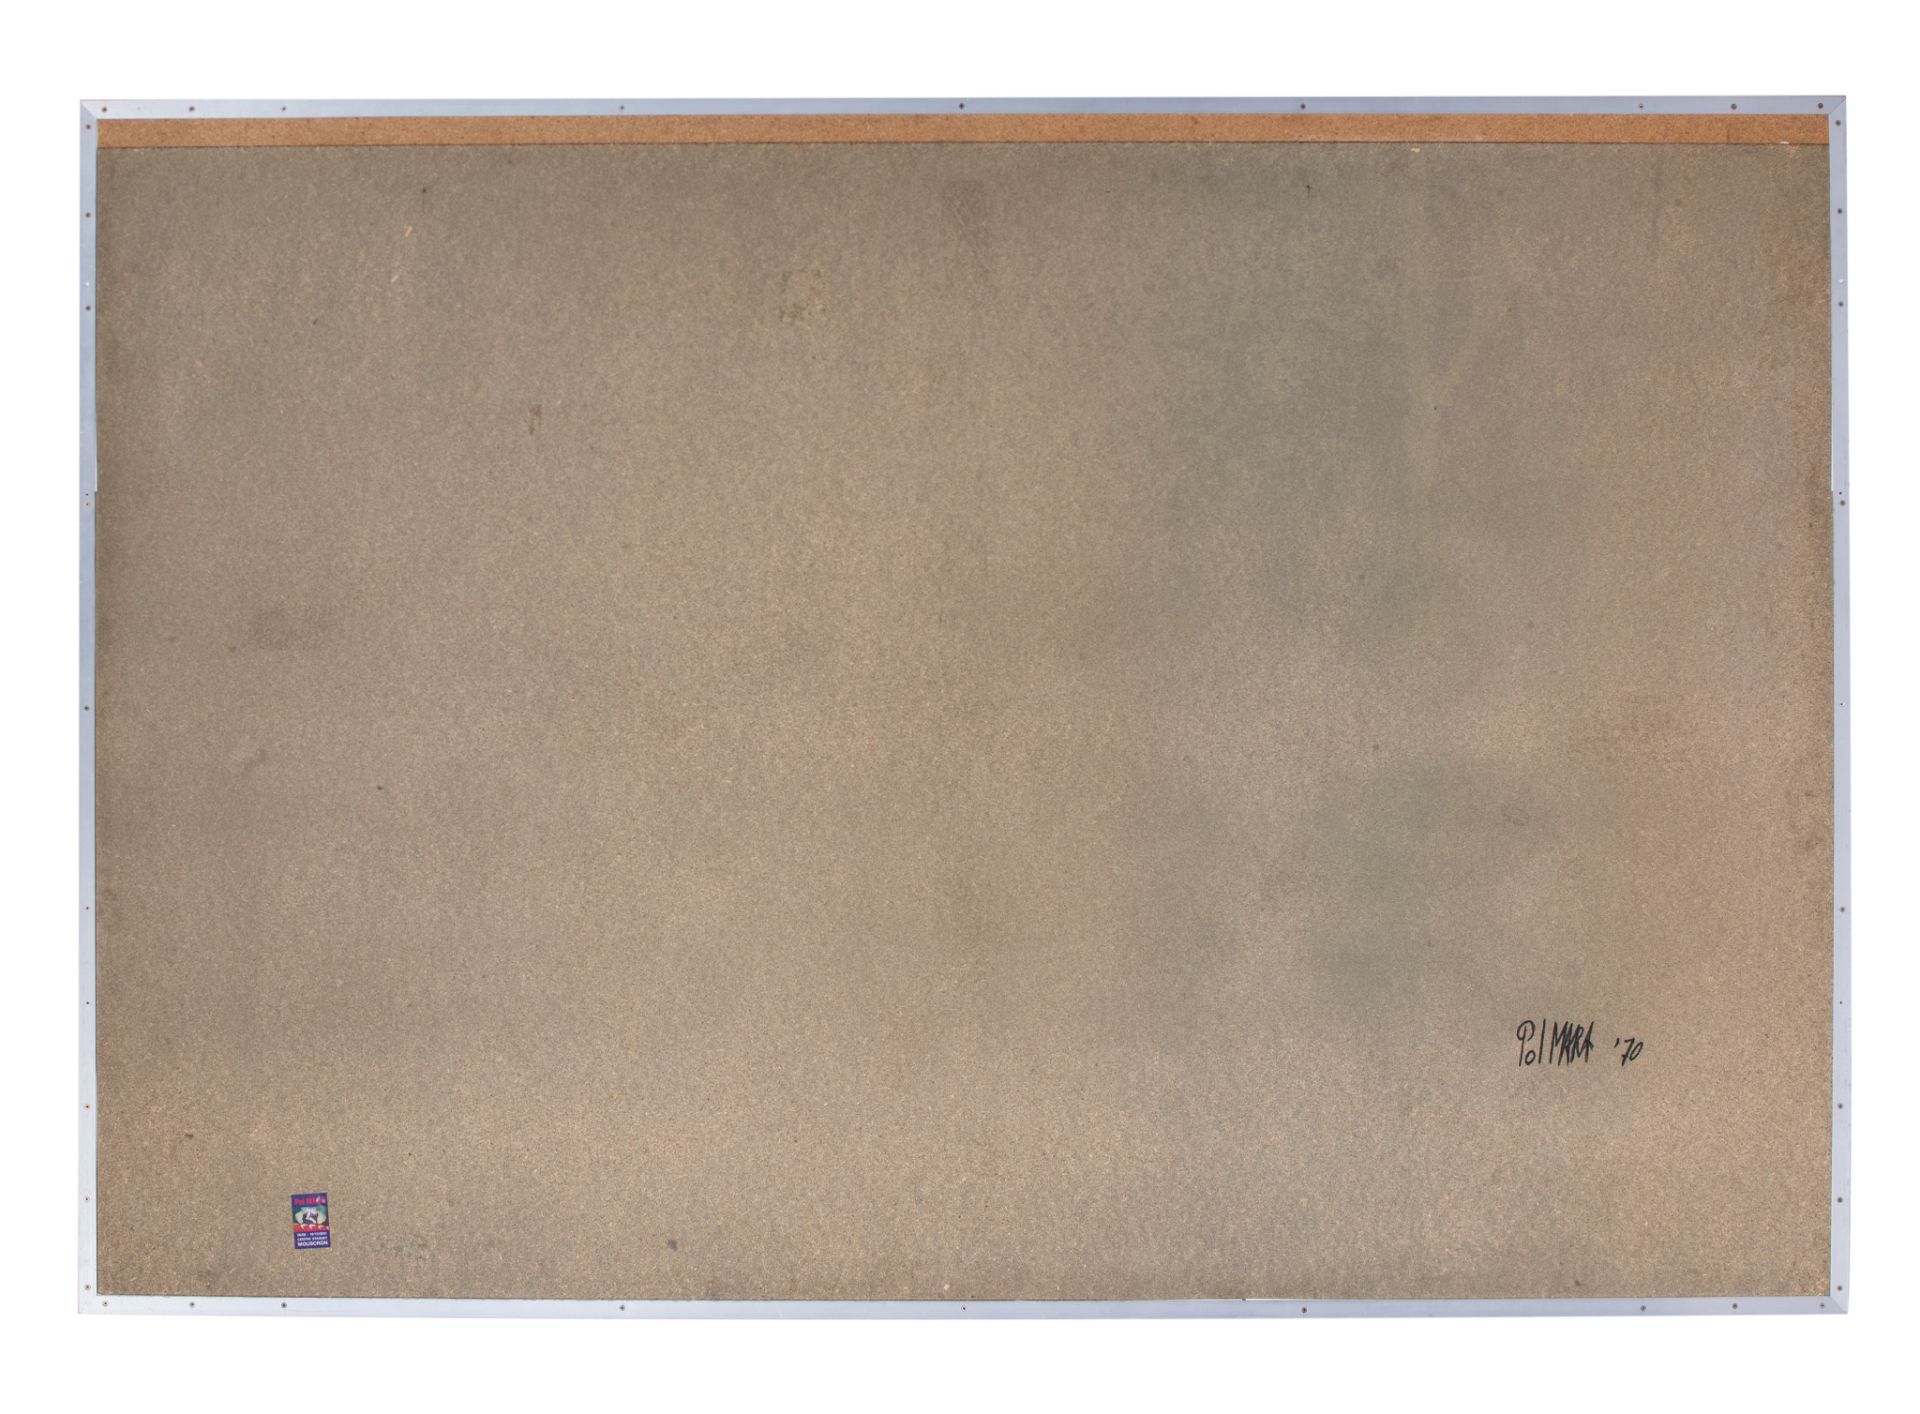 Pol Mara (1920-1998), Maya desnuda, Oil on plastic on polyester, 1970, 130 x 190 cm - Image 3 of 6